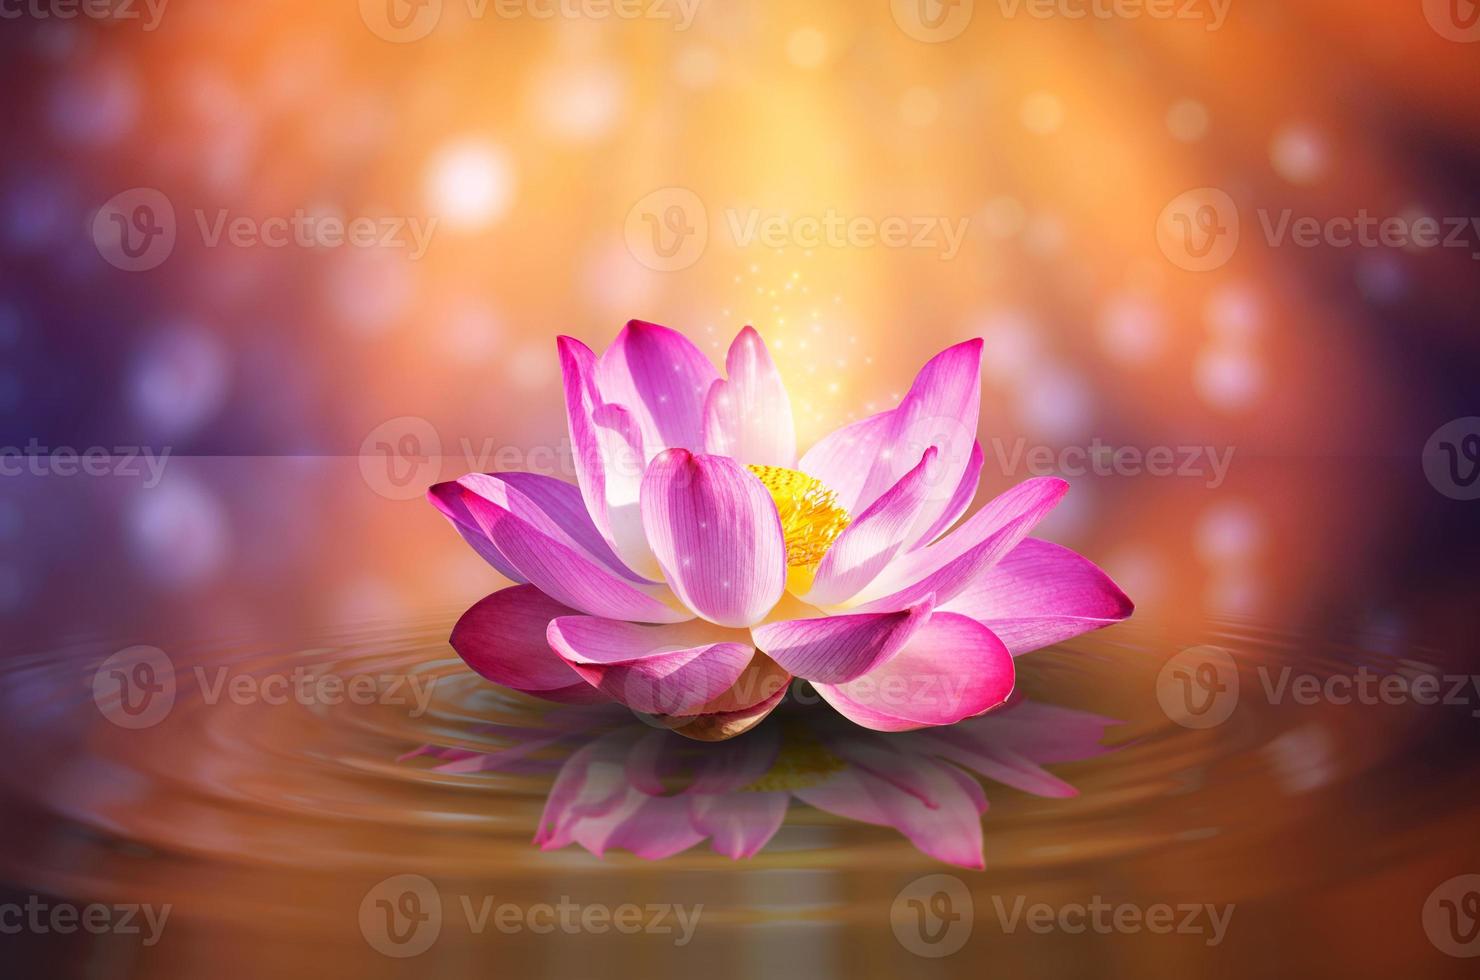 flor de lótus rosa luz roxa flutuante luz brilhante fundo roxo foto